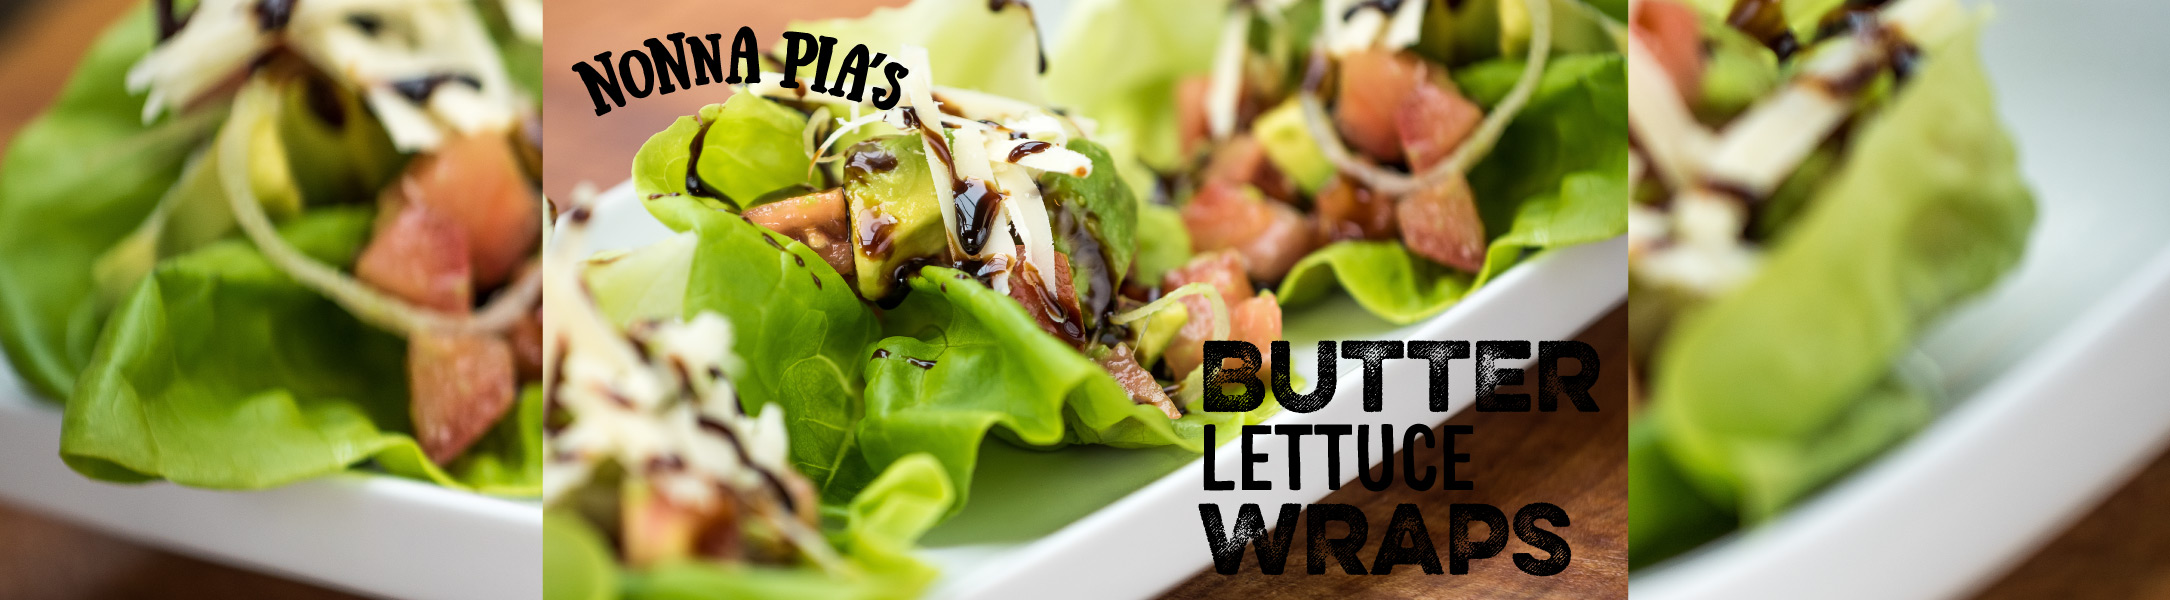 butter lettuce wraps